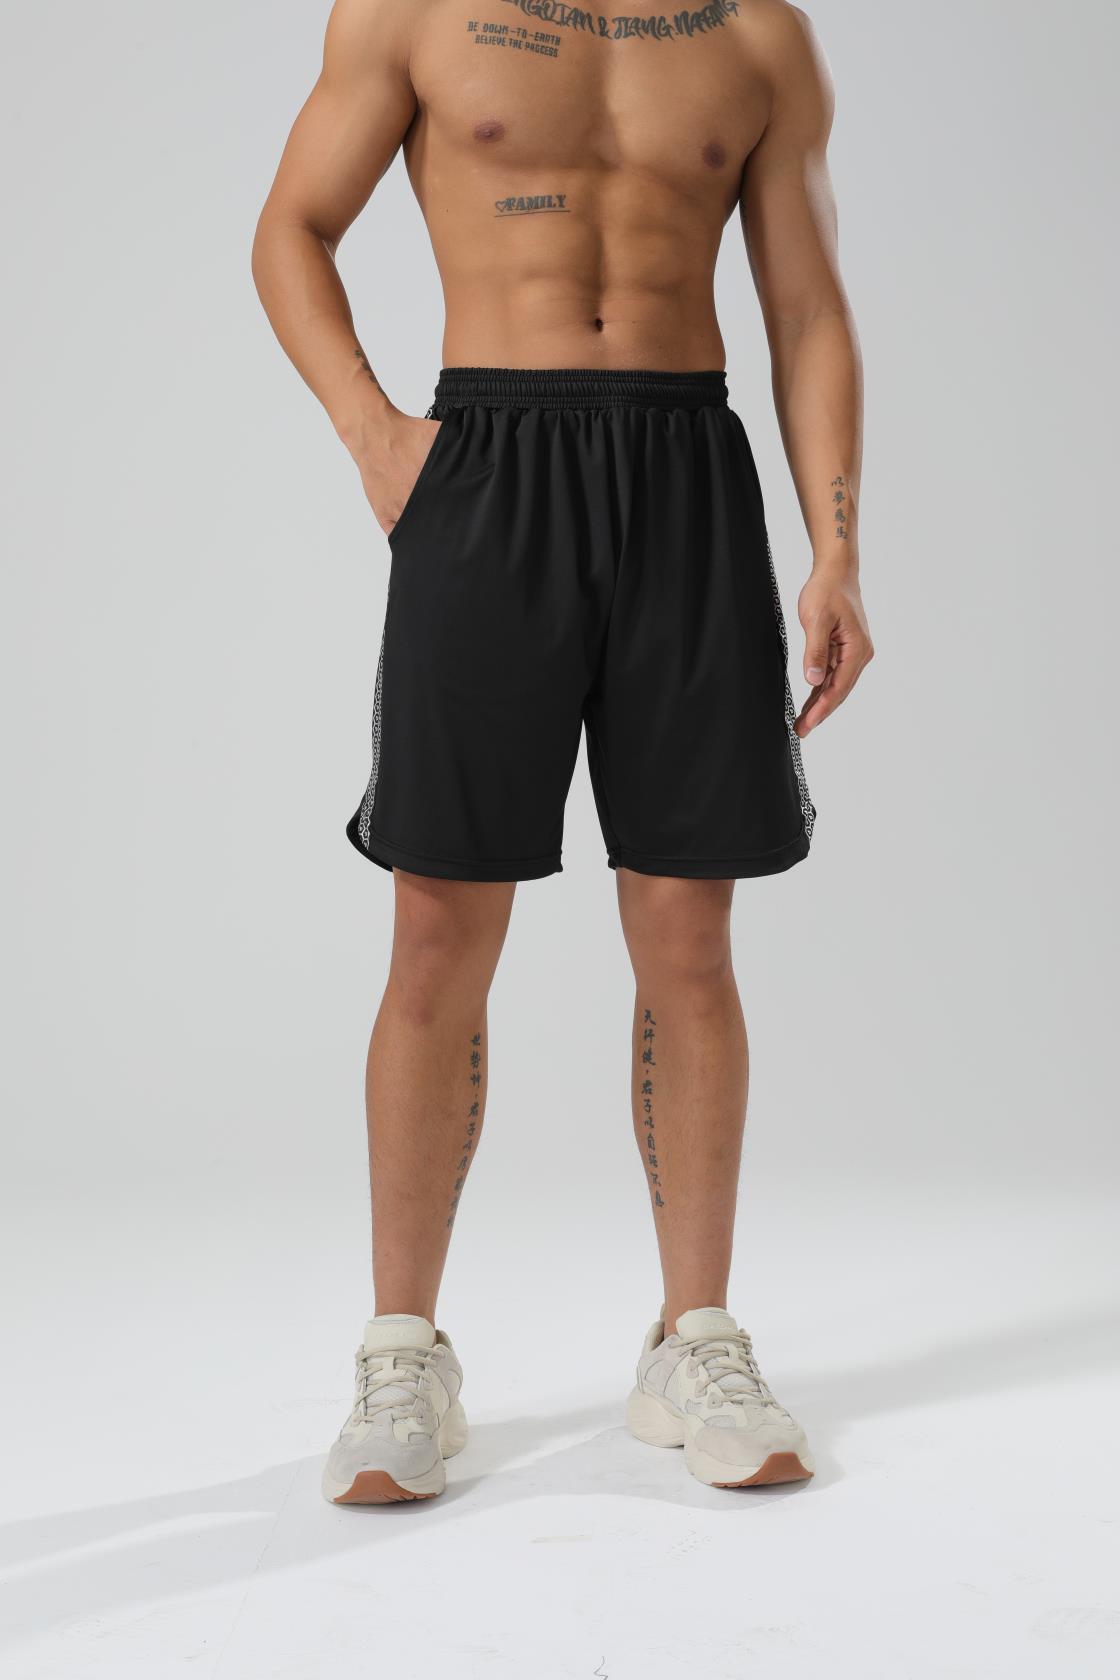 Men's Pro Shorts